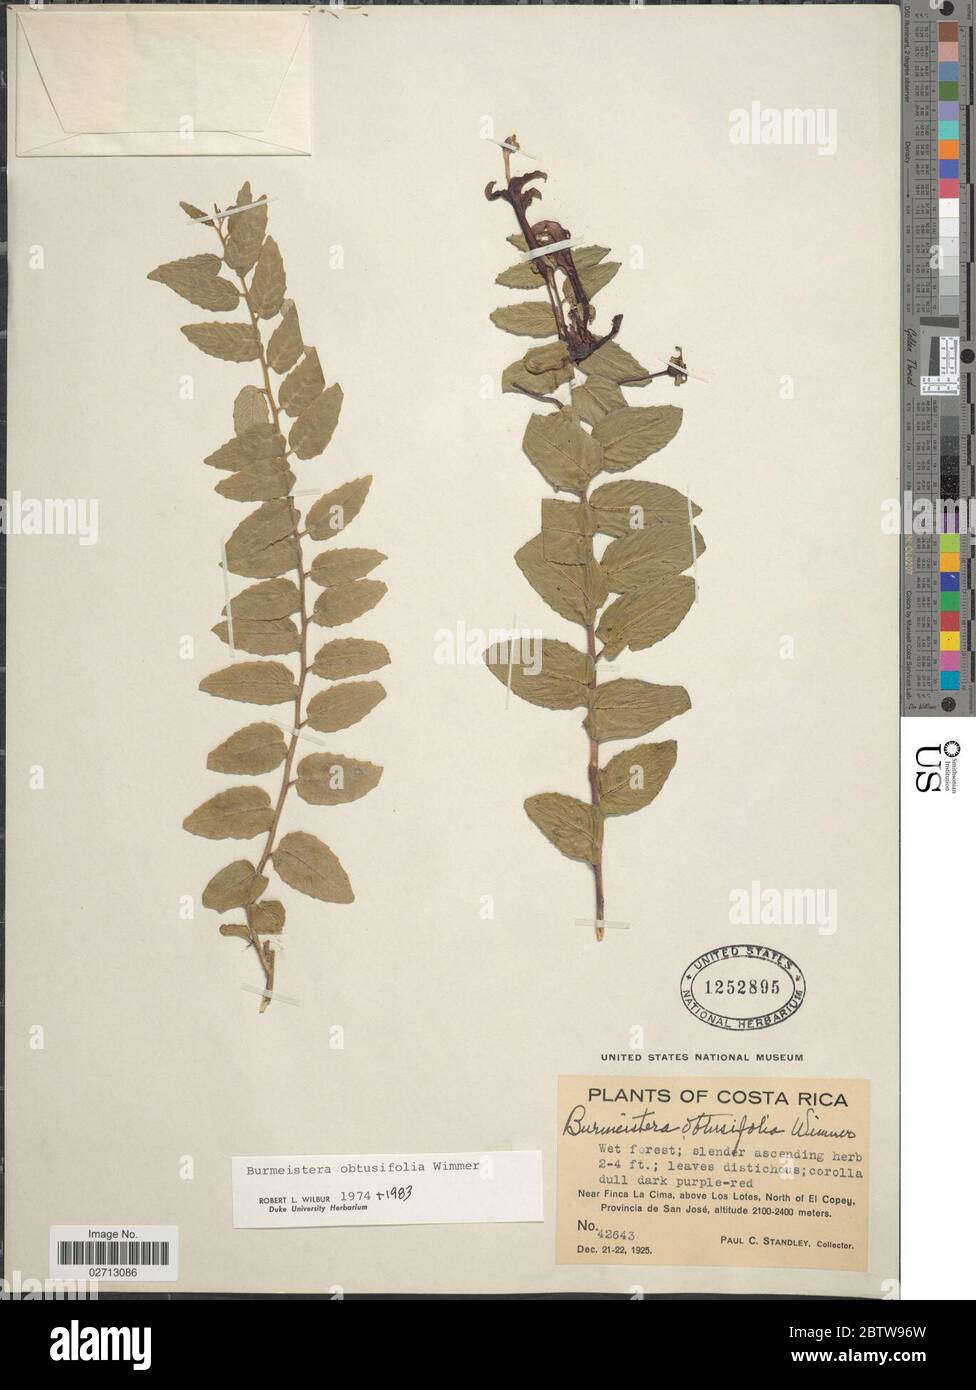 Burmeistera obtusifolia E Wimm. Stock Photo